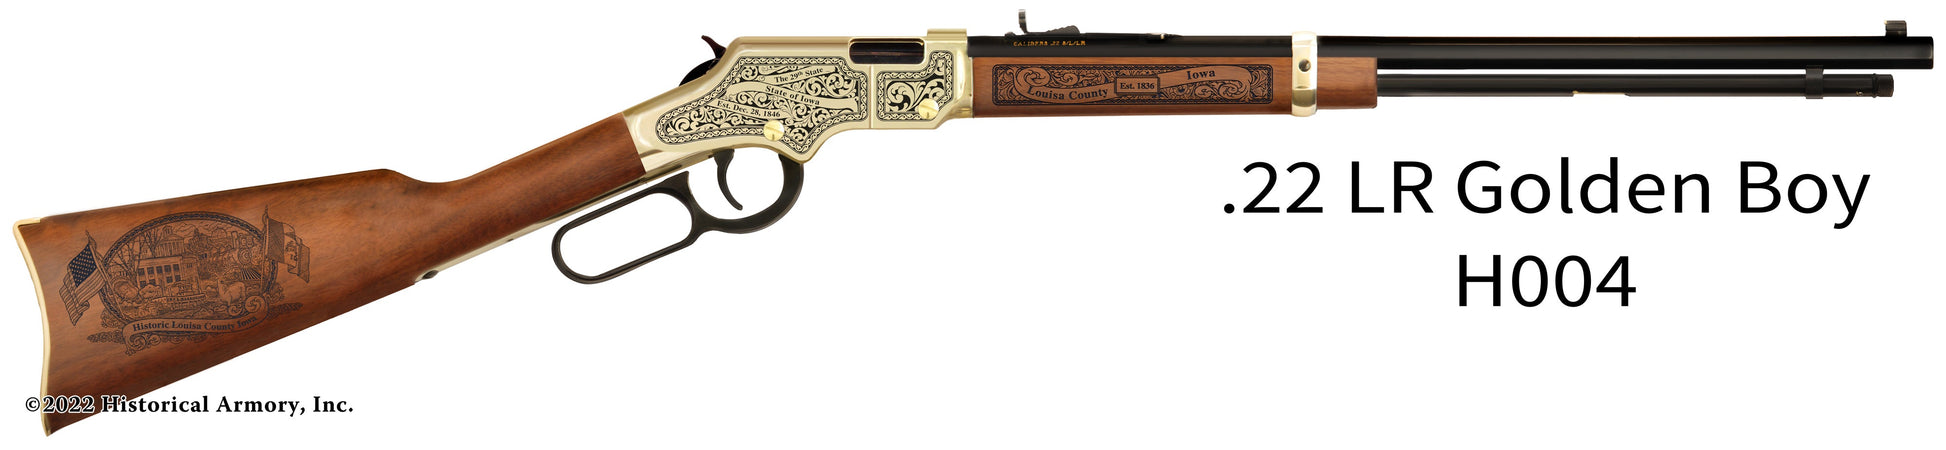 Louisa County Iowa Engraved Henry Golden Boy Rifle